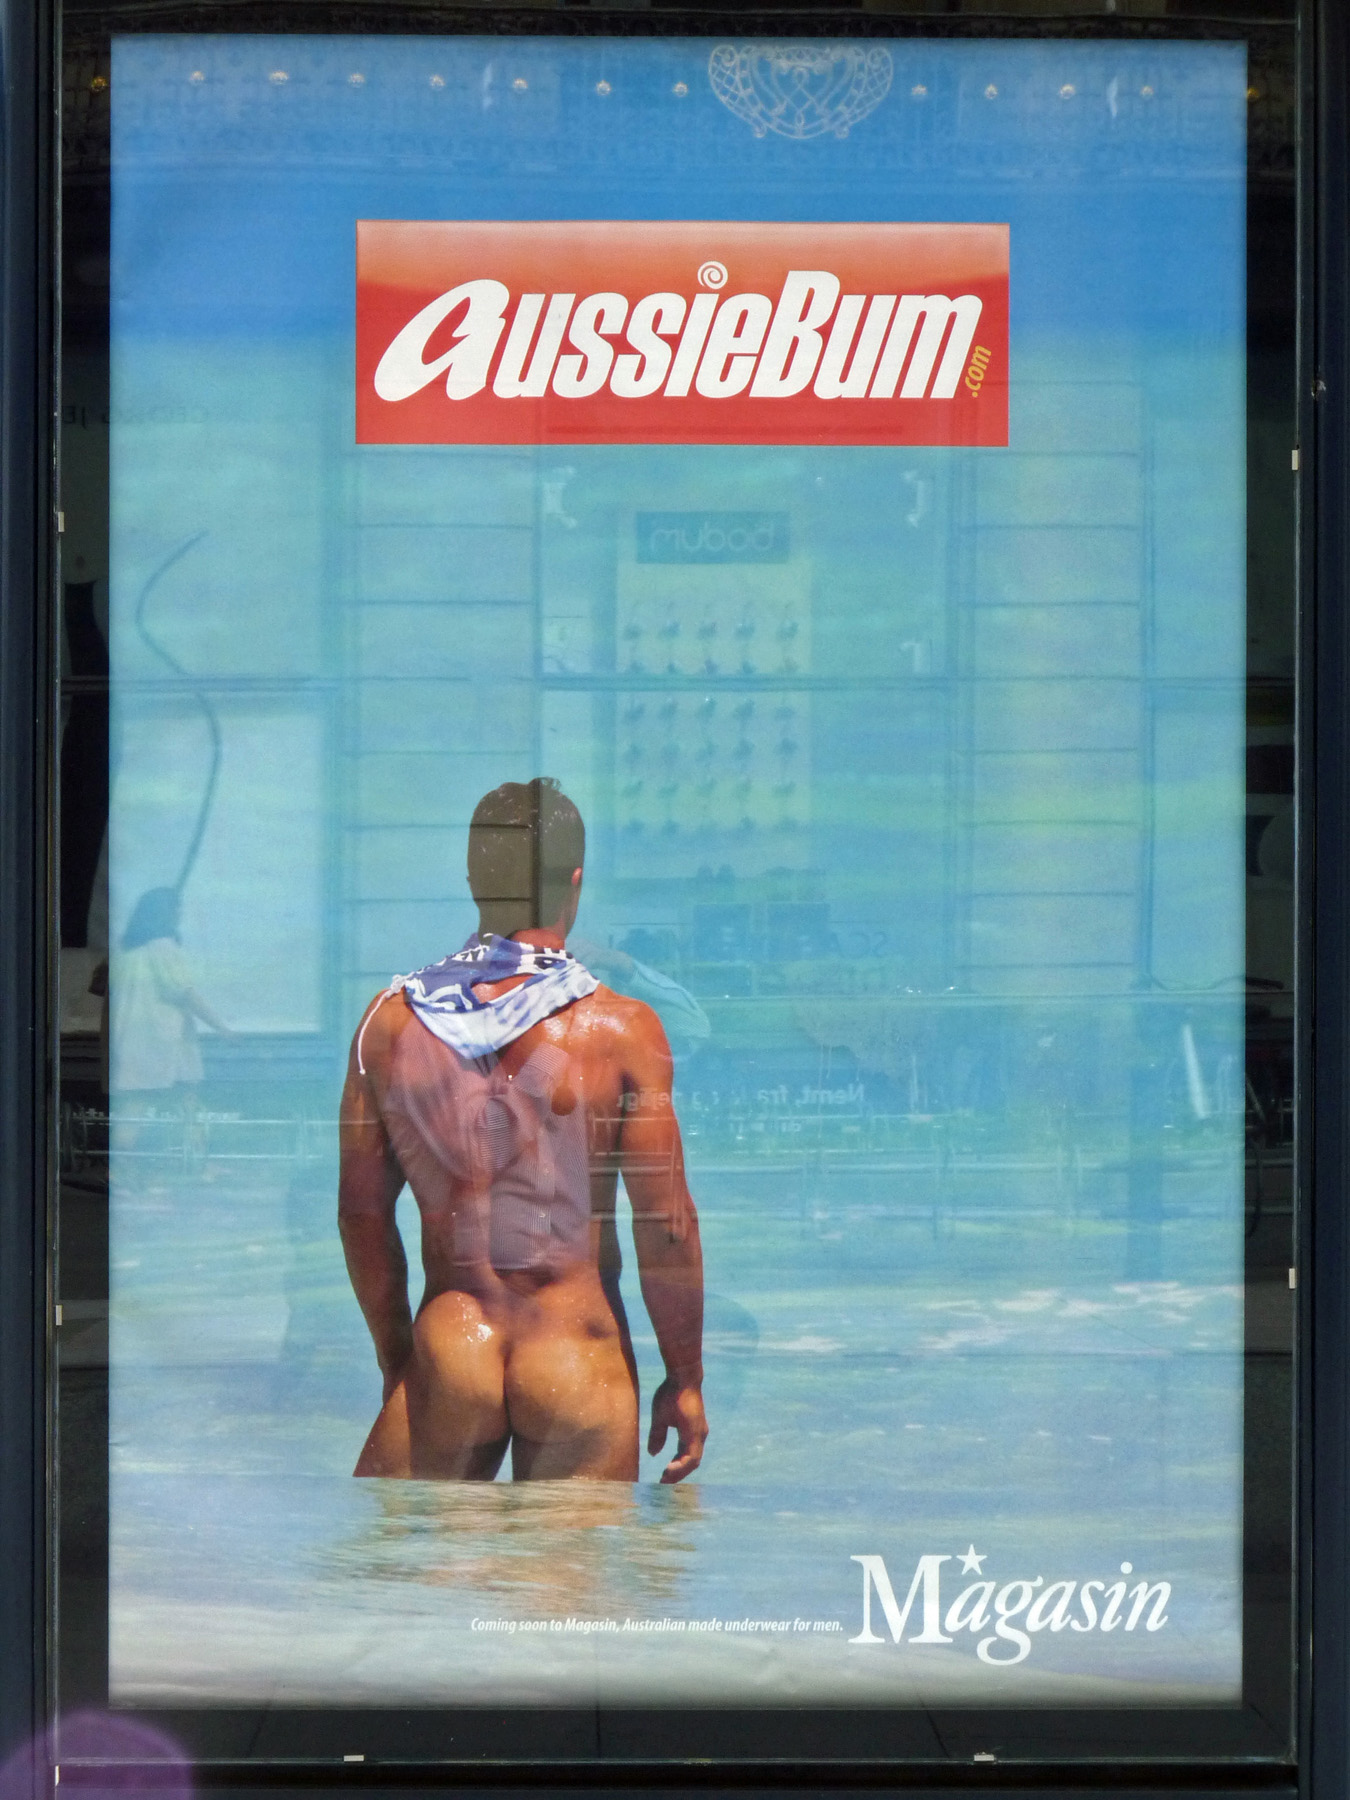 AussieBum.jpg  by modeldad